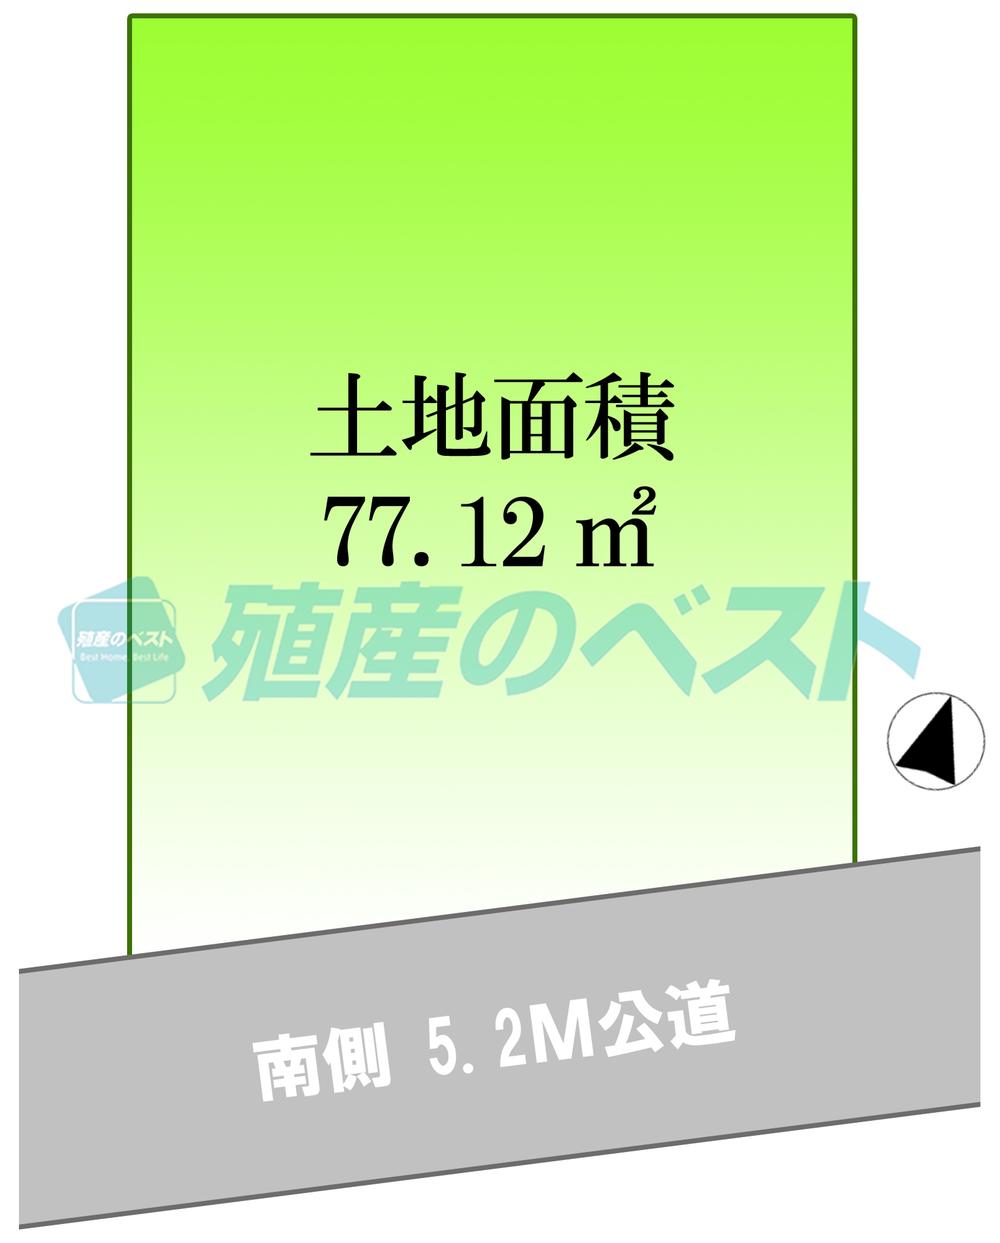 Compartment figure. Land price 49,800,000 yen, Land area 77.12 sq m